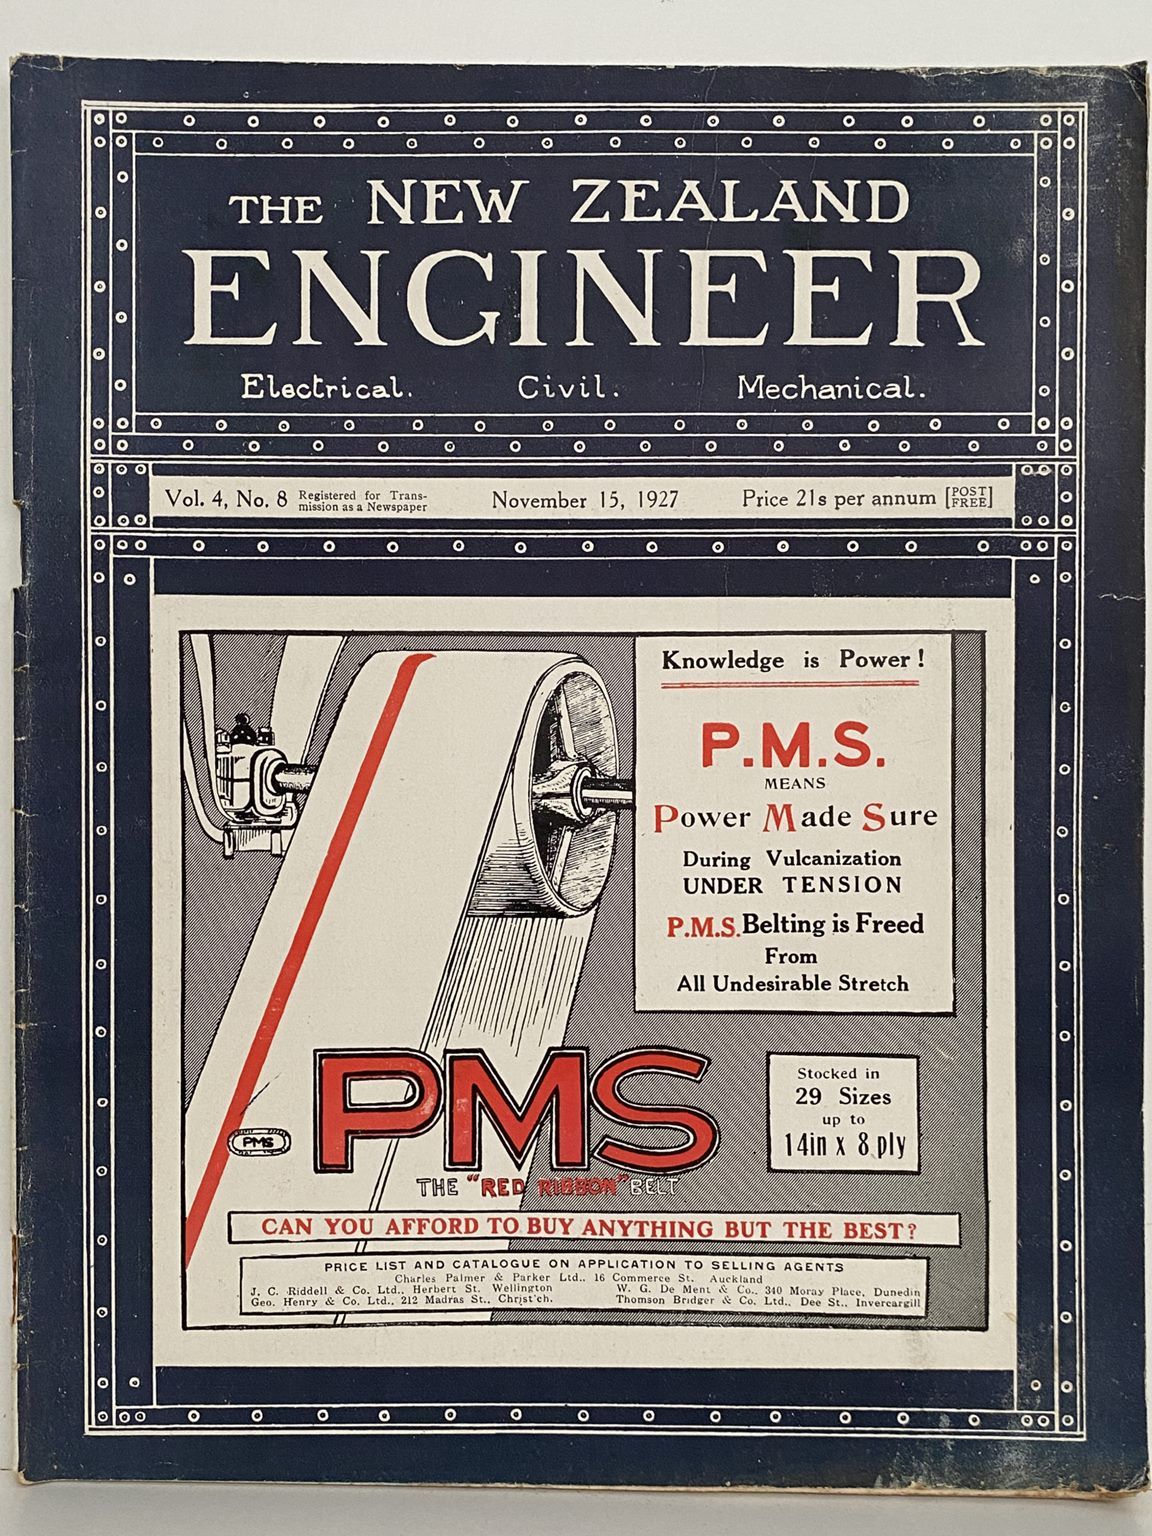 OLD MAGAZINE: The New Zealand Engineer Vol. 4, No. 8 - 15 November 1927